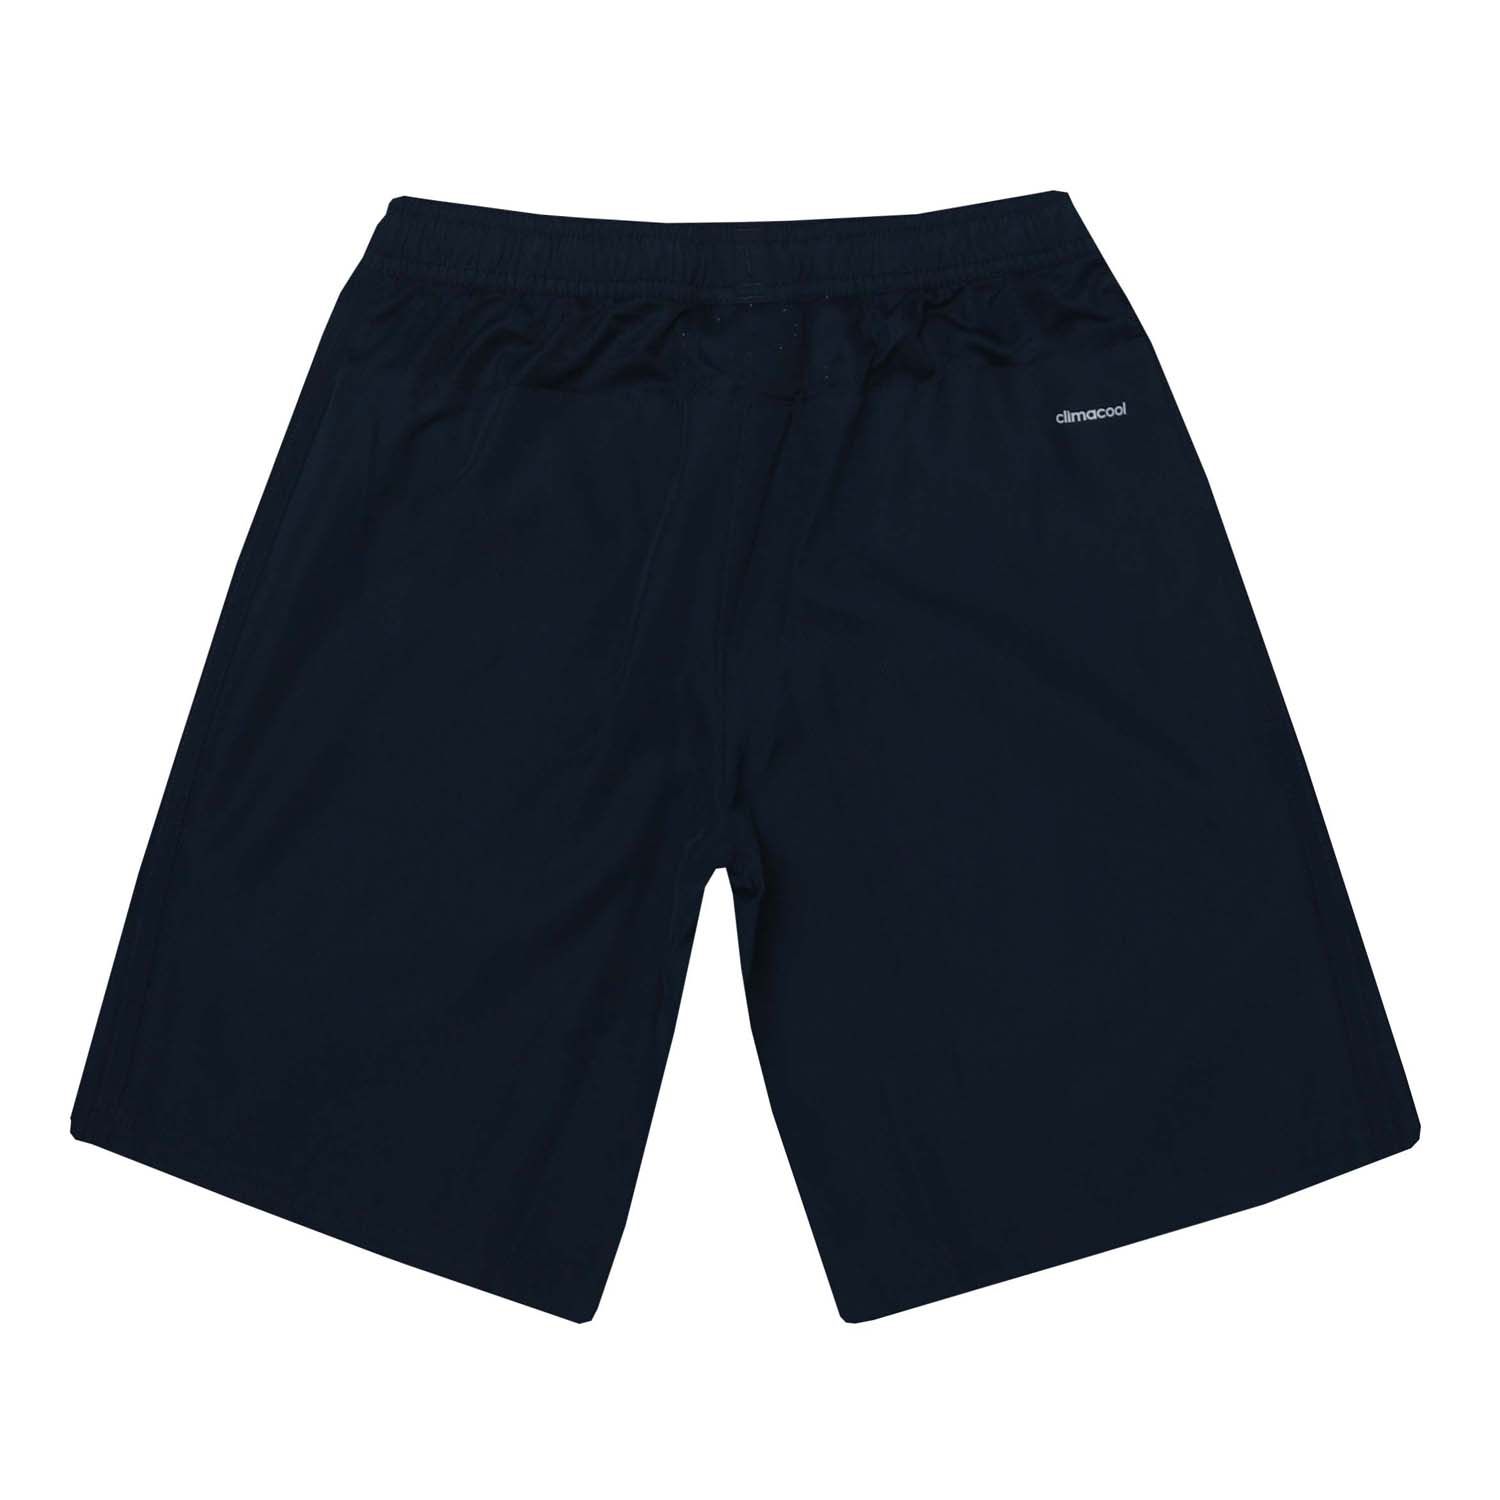 Navy-White Junior Tiro 17 Woven Shorts - Get The